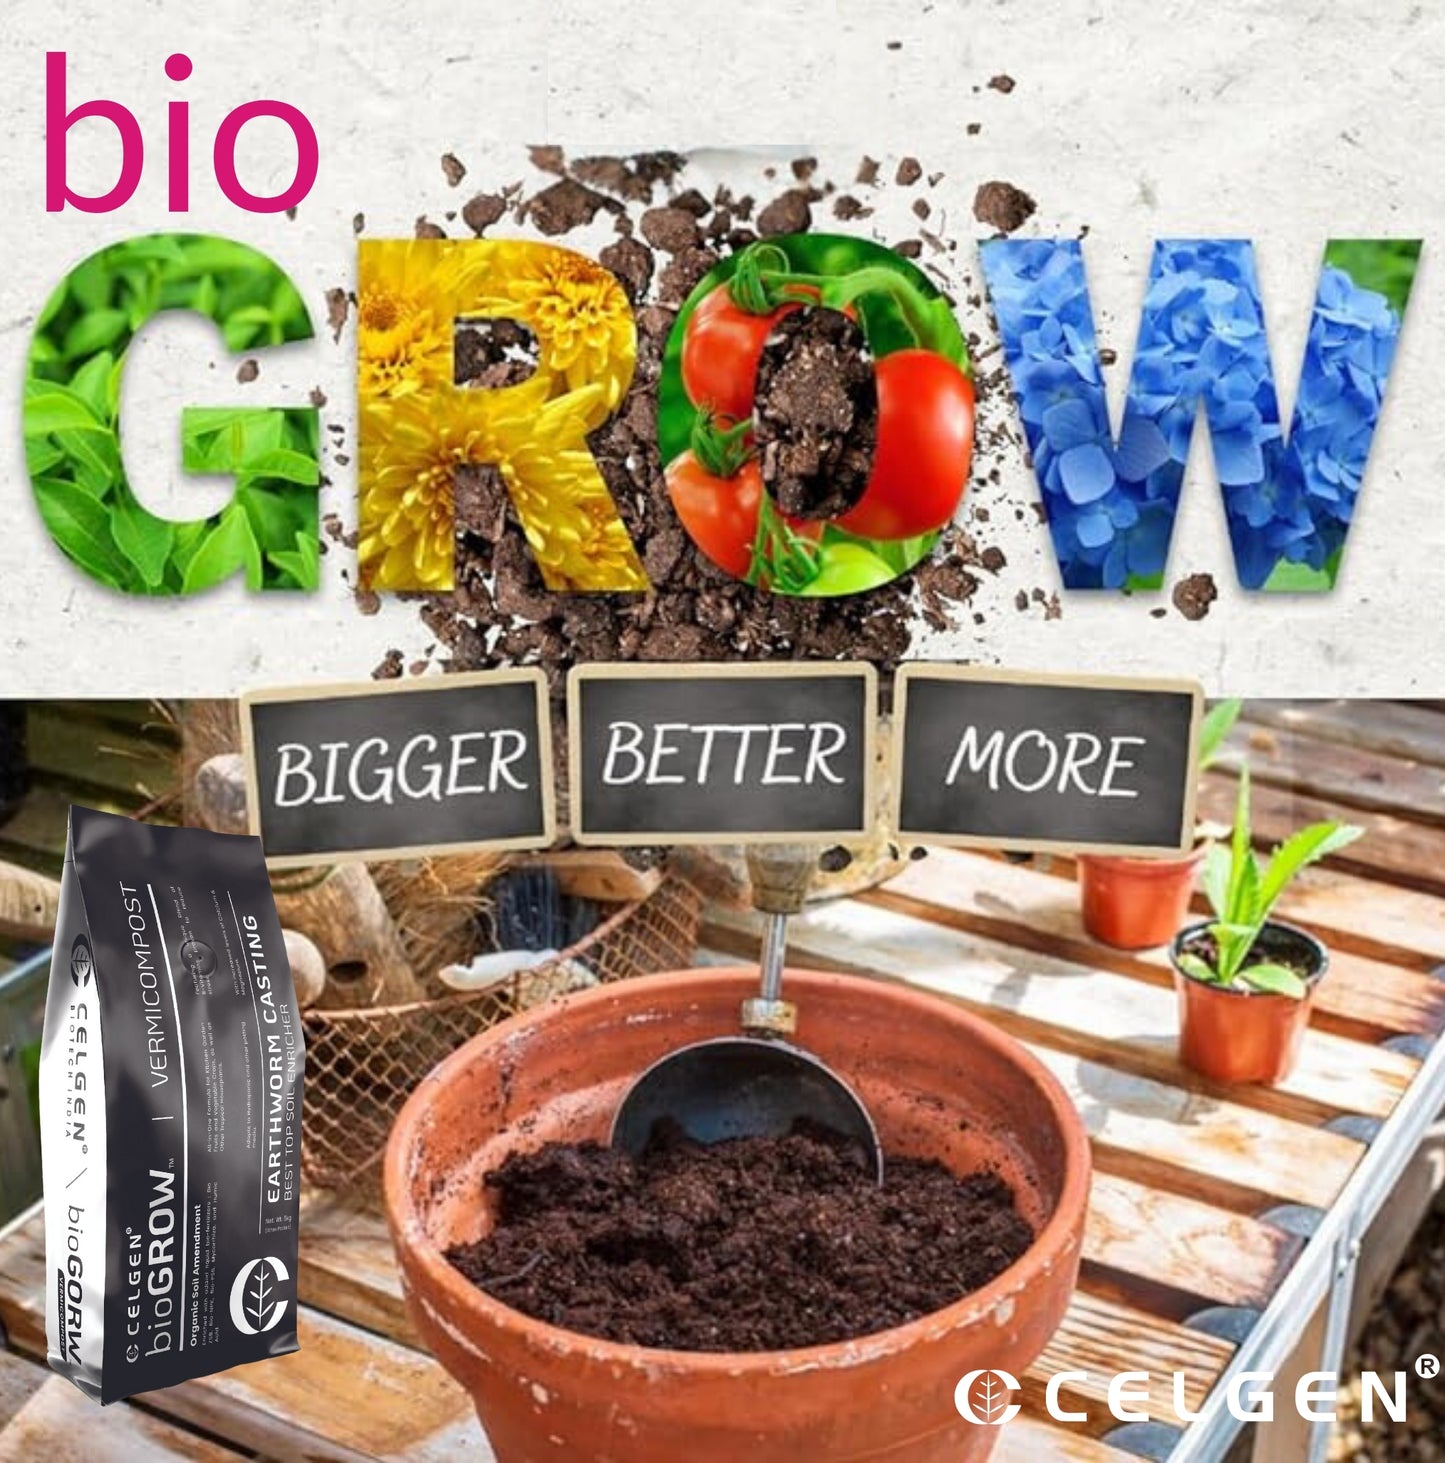 Celgen-bioGROW Vermicompost (Premium Organic Soil Enhancer with Added Bio Fertilizers)